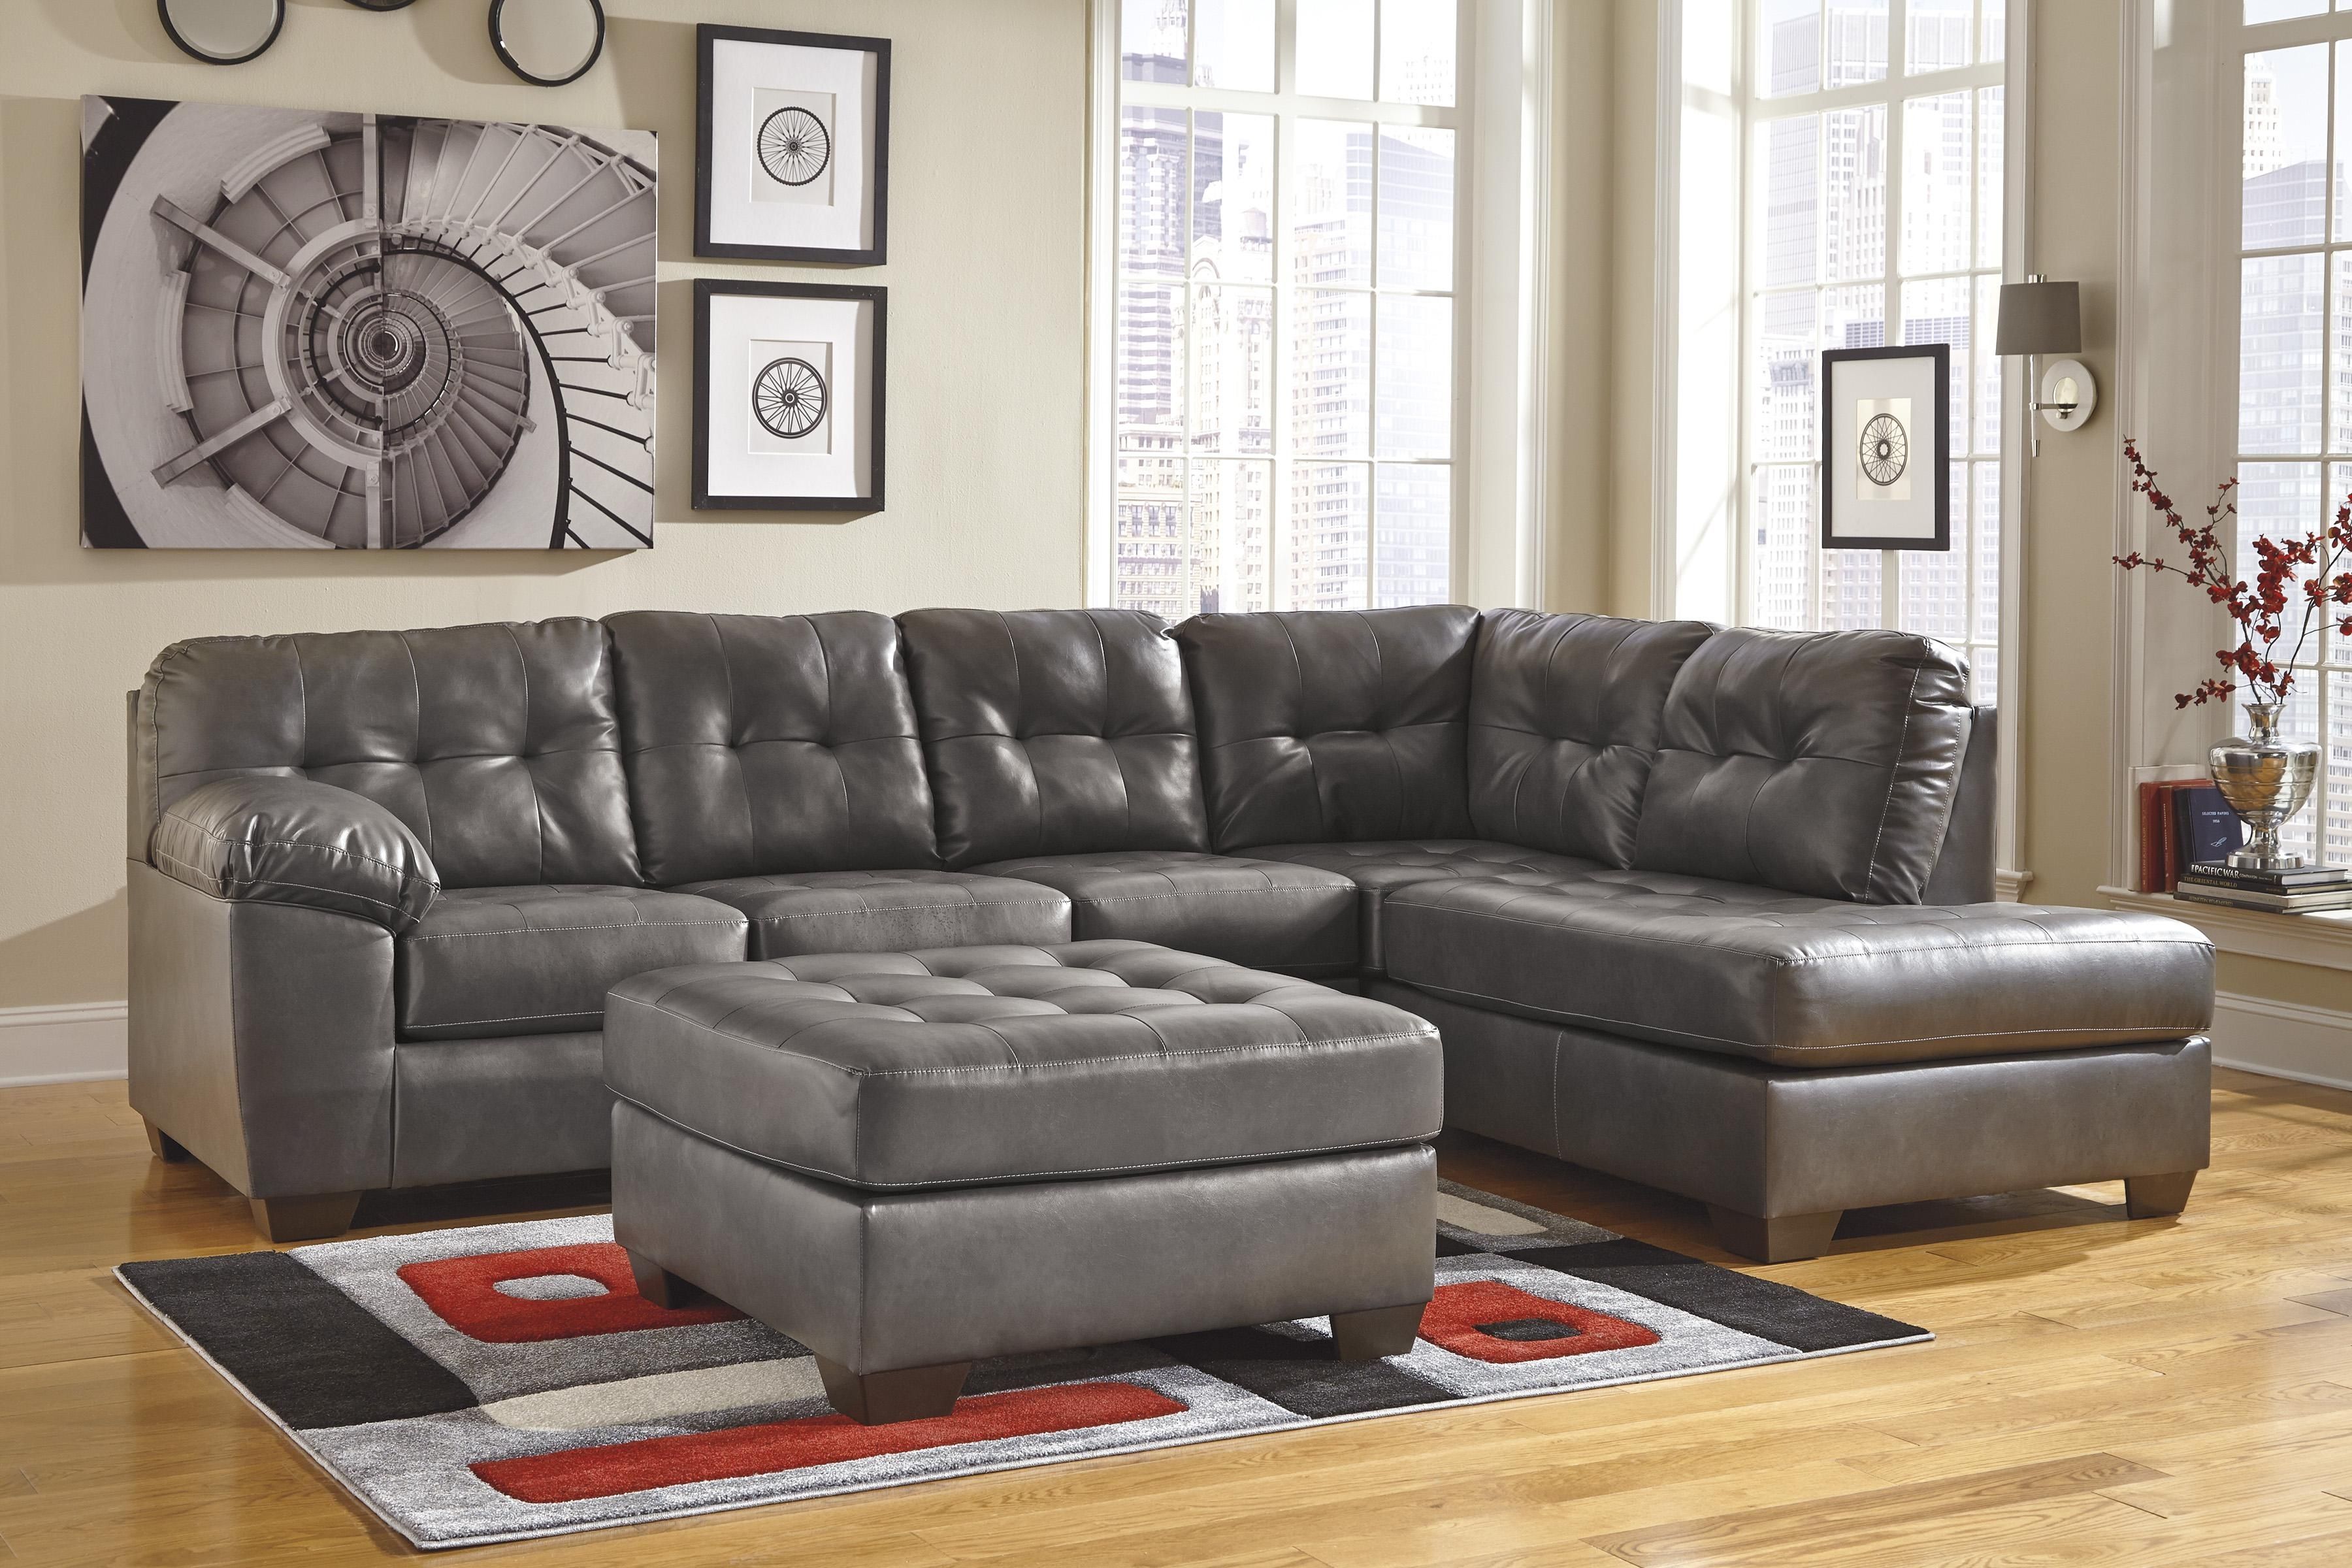 grey leather sectional sleeper sofa